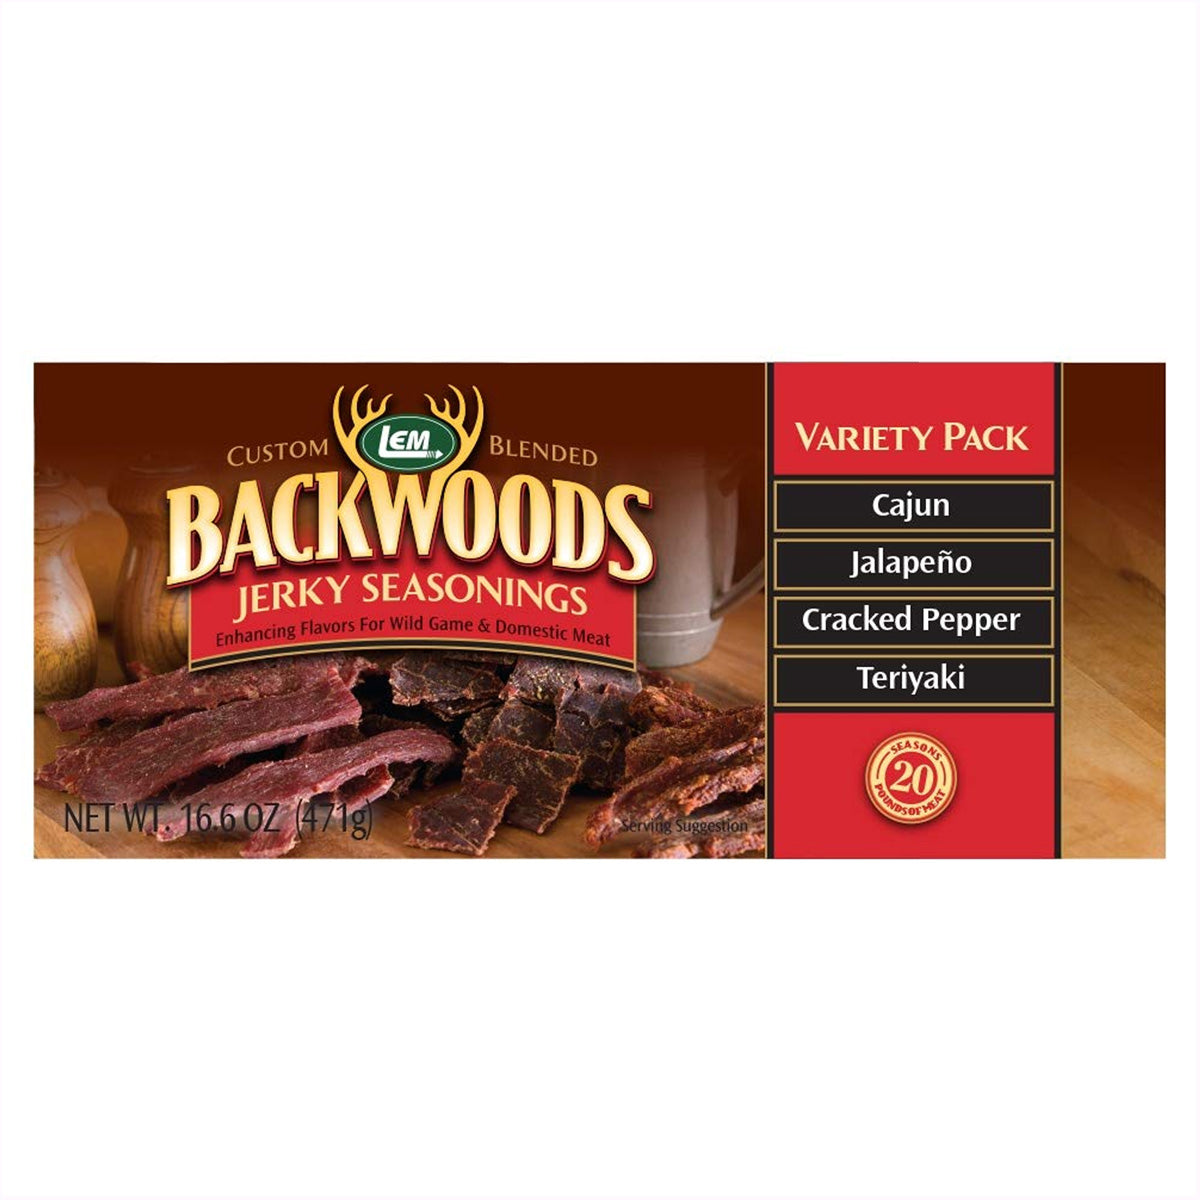 Backwoods Jerky Seasoning Cajun Jalapeno Cracked Pepper Teriyaki Variety Pack